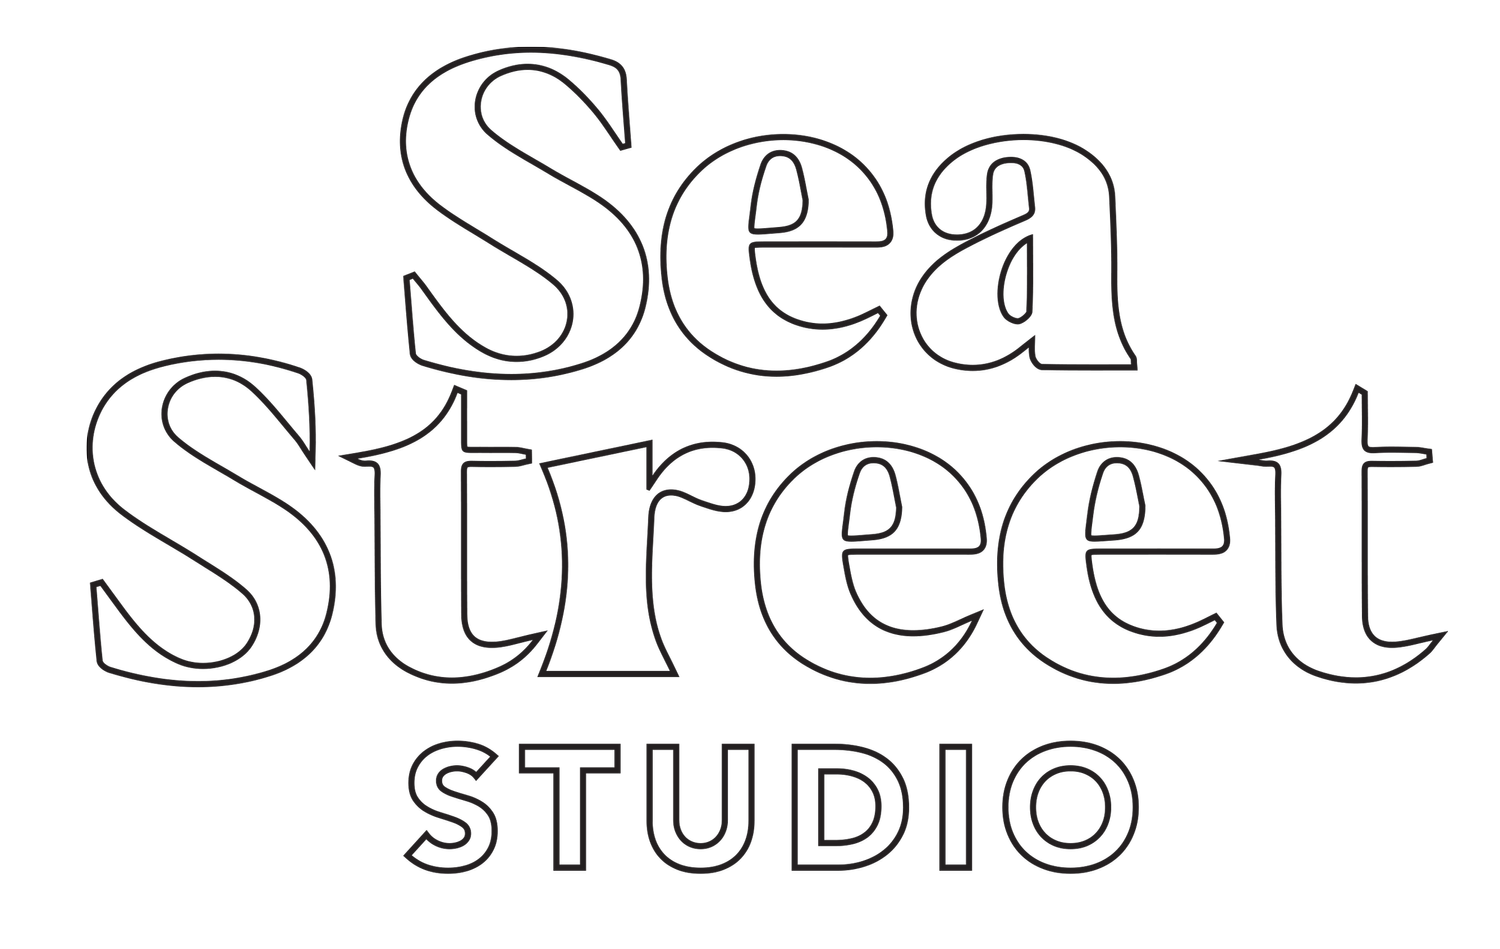 Sea Street Studio